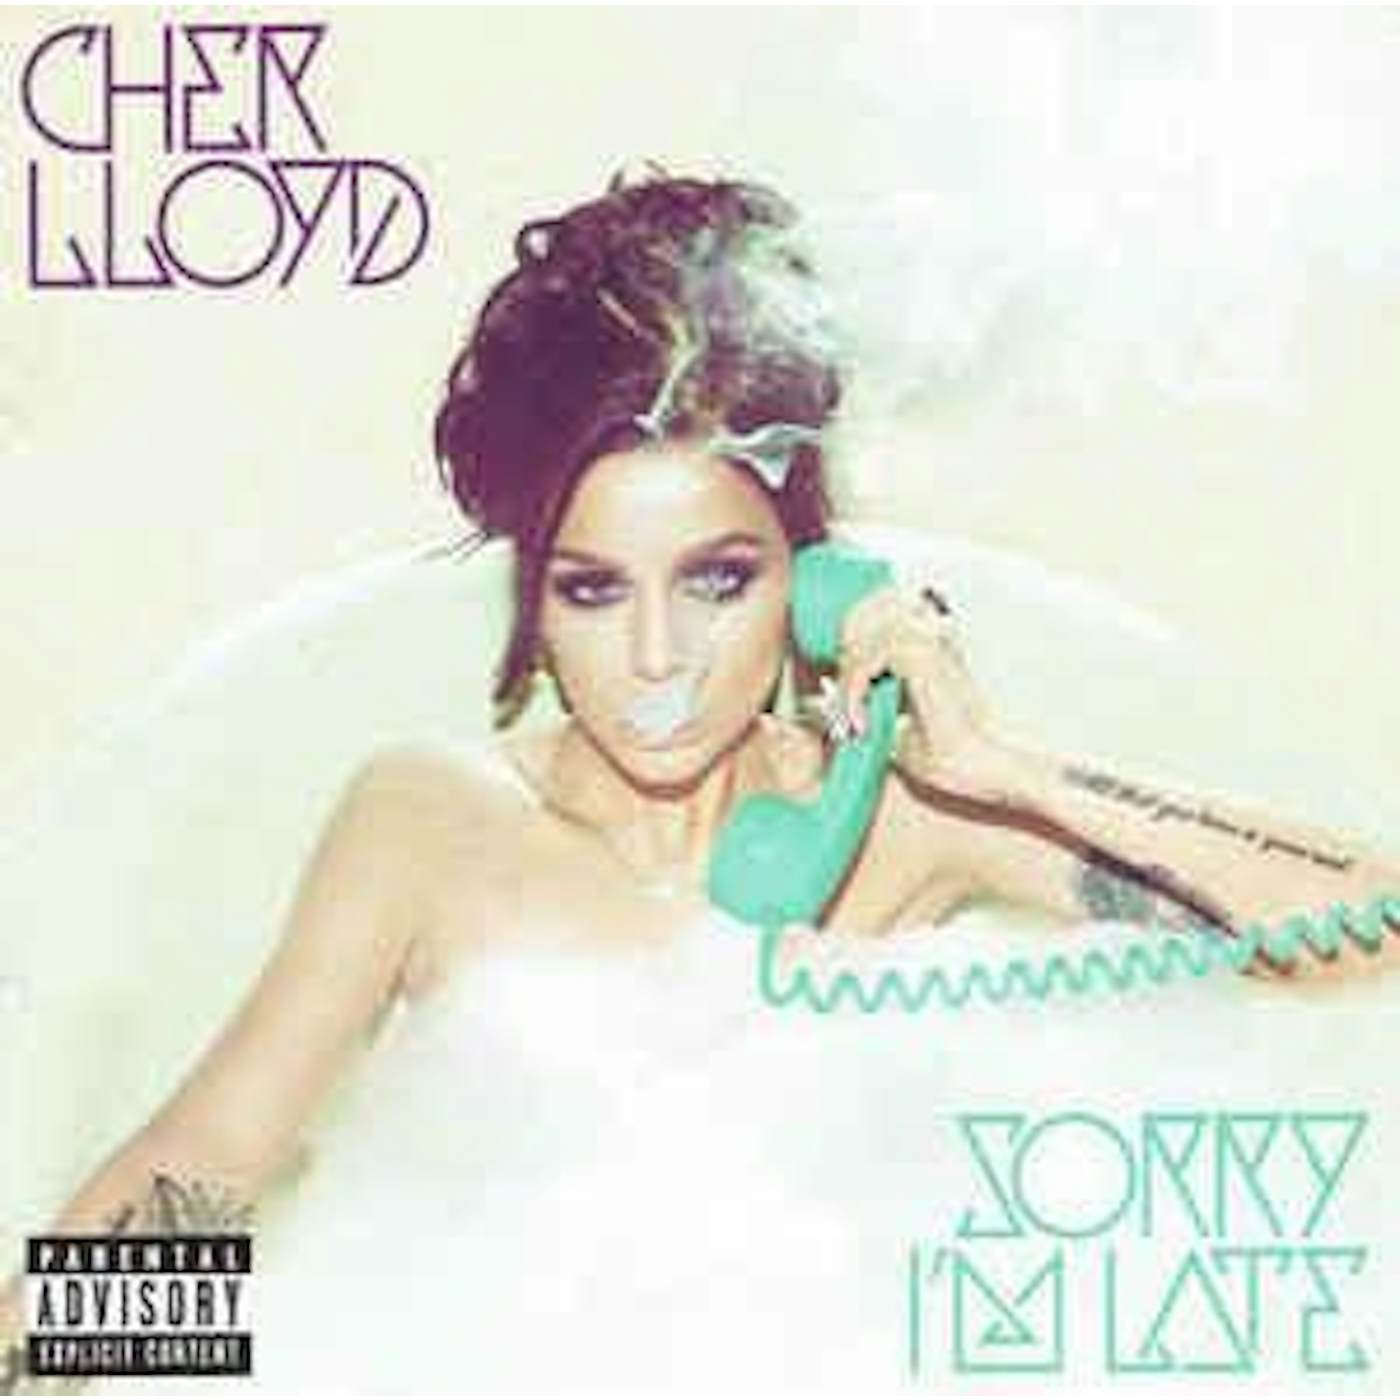 Cher Lloyd SORRY I'M LATE CD